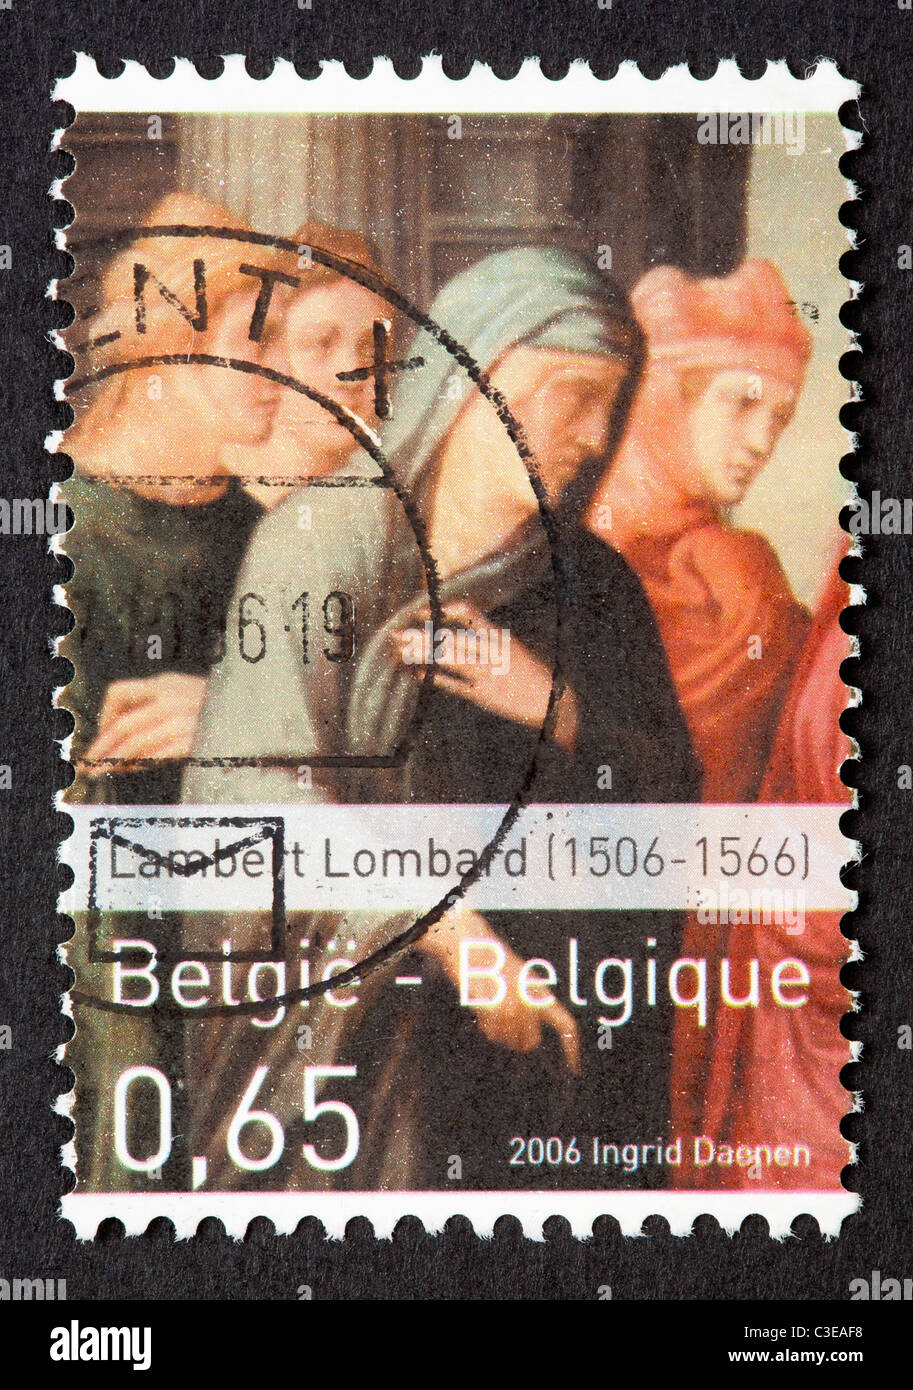 Belgian postage stamp Stock Photo